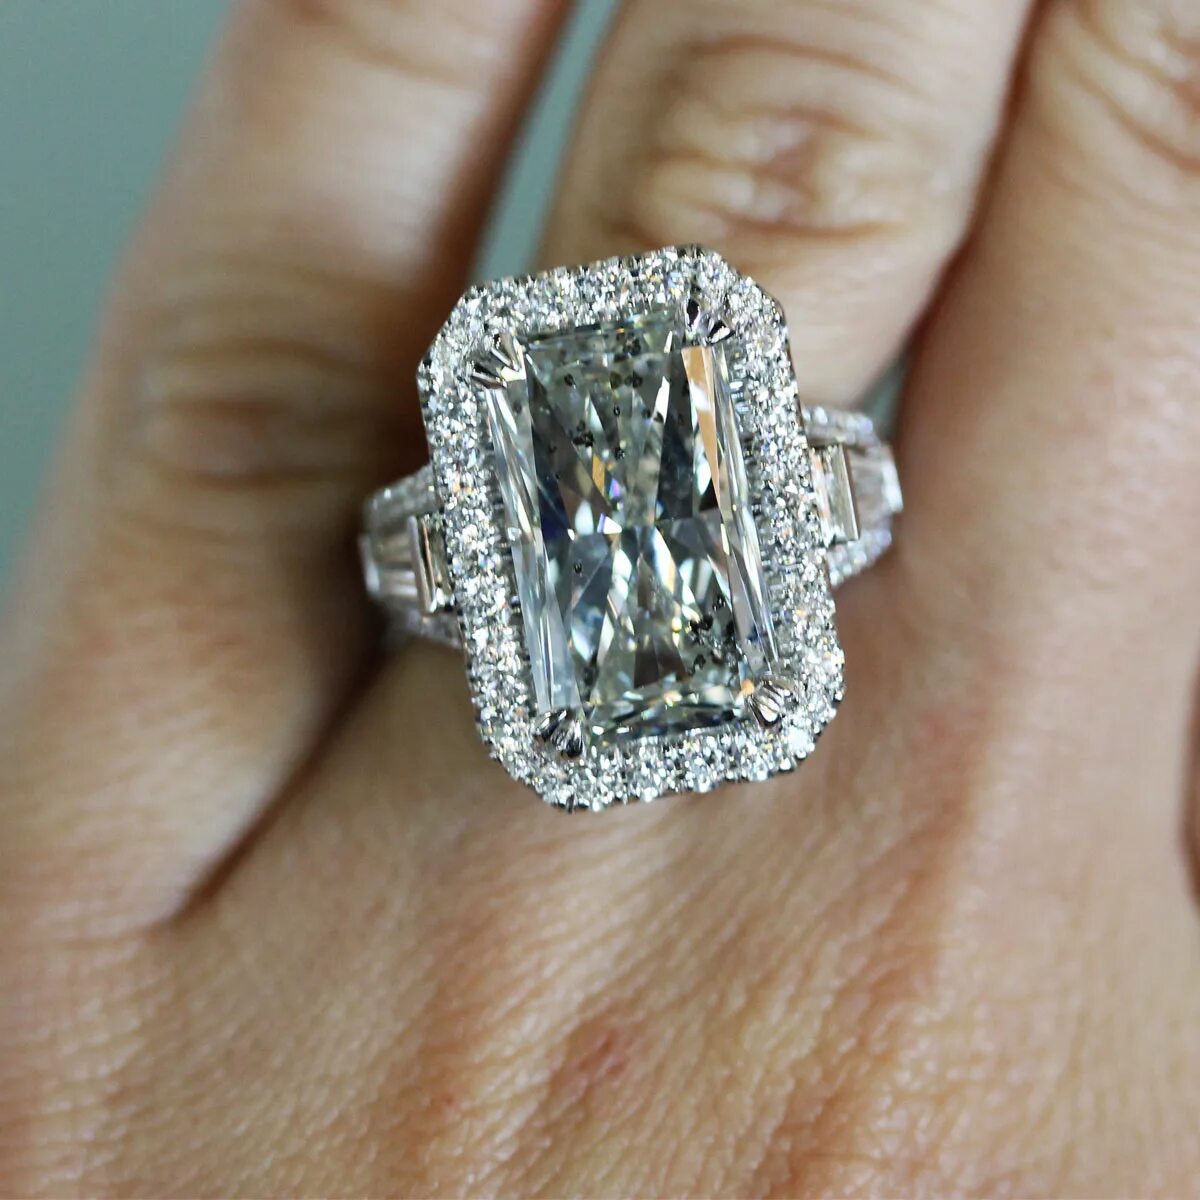 20 карат. Кольцо с бриллиантом 20 карат. Огранка Радиант кольцо. Emerald карат 20 карат.